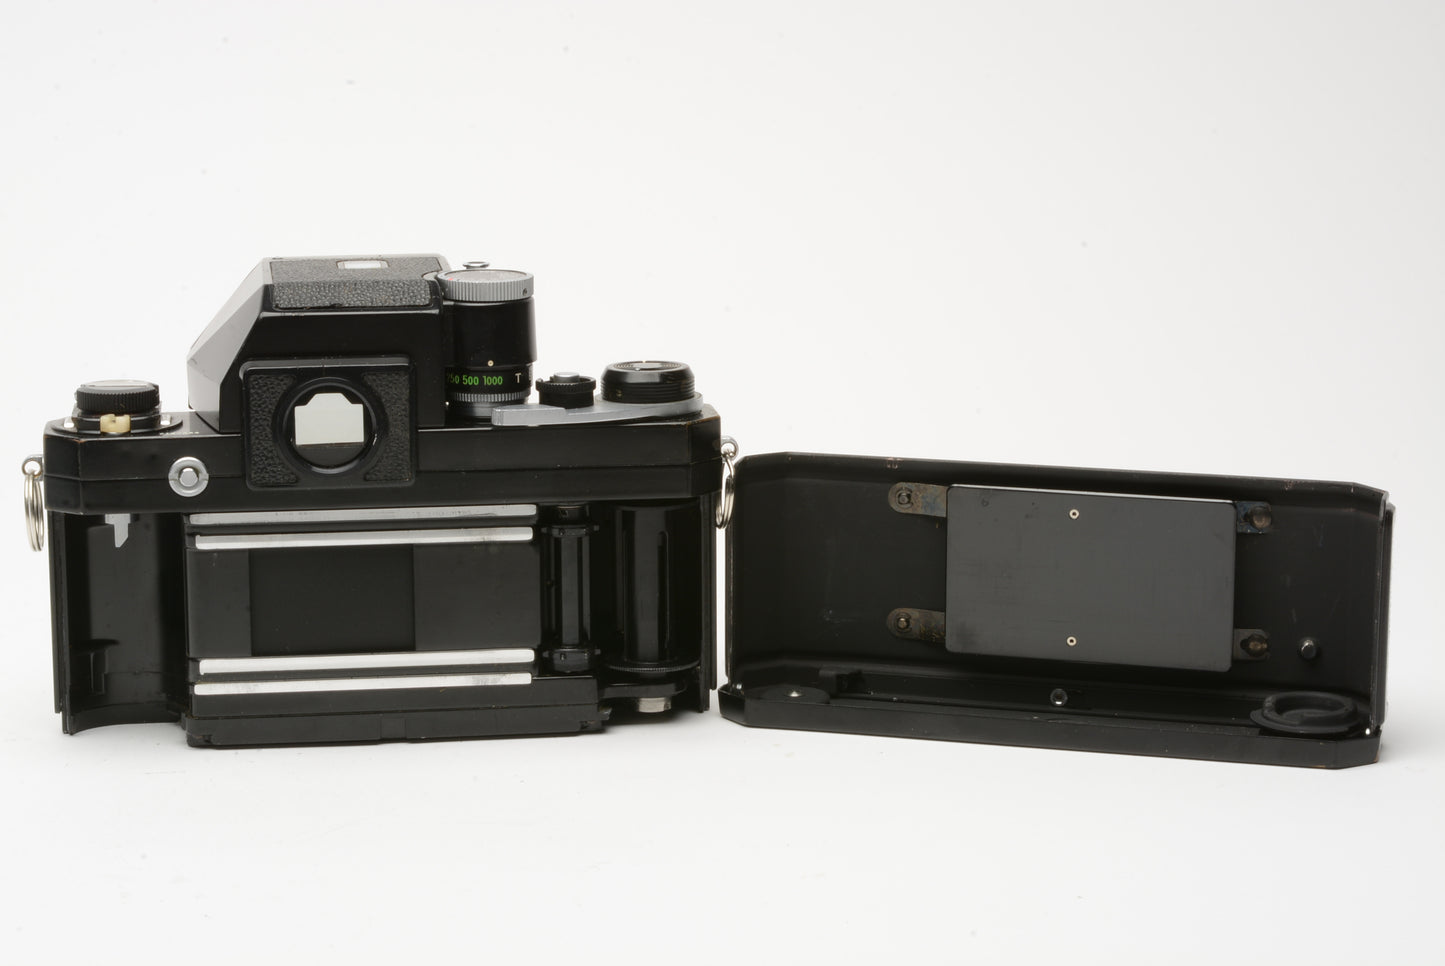 Nikon F FTn Photomic 35mm SLR Body (Black), new seals, strap, cap